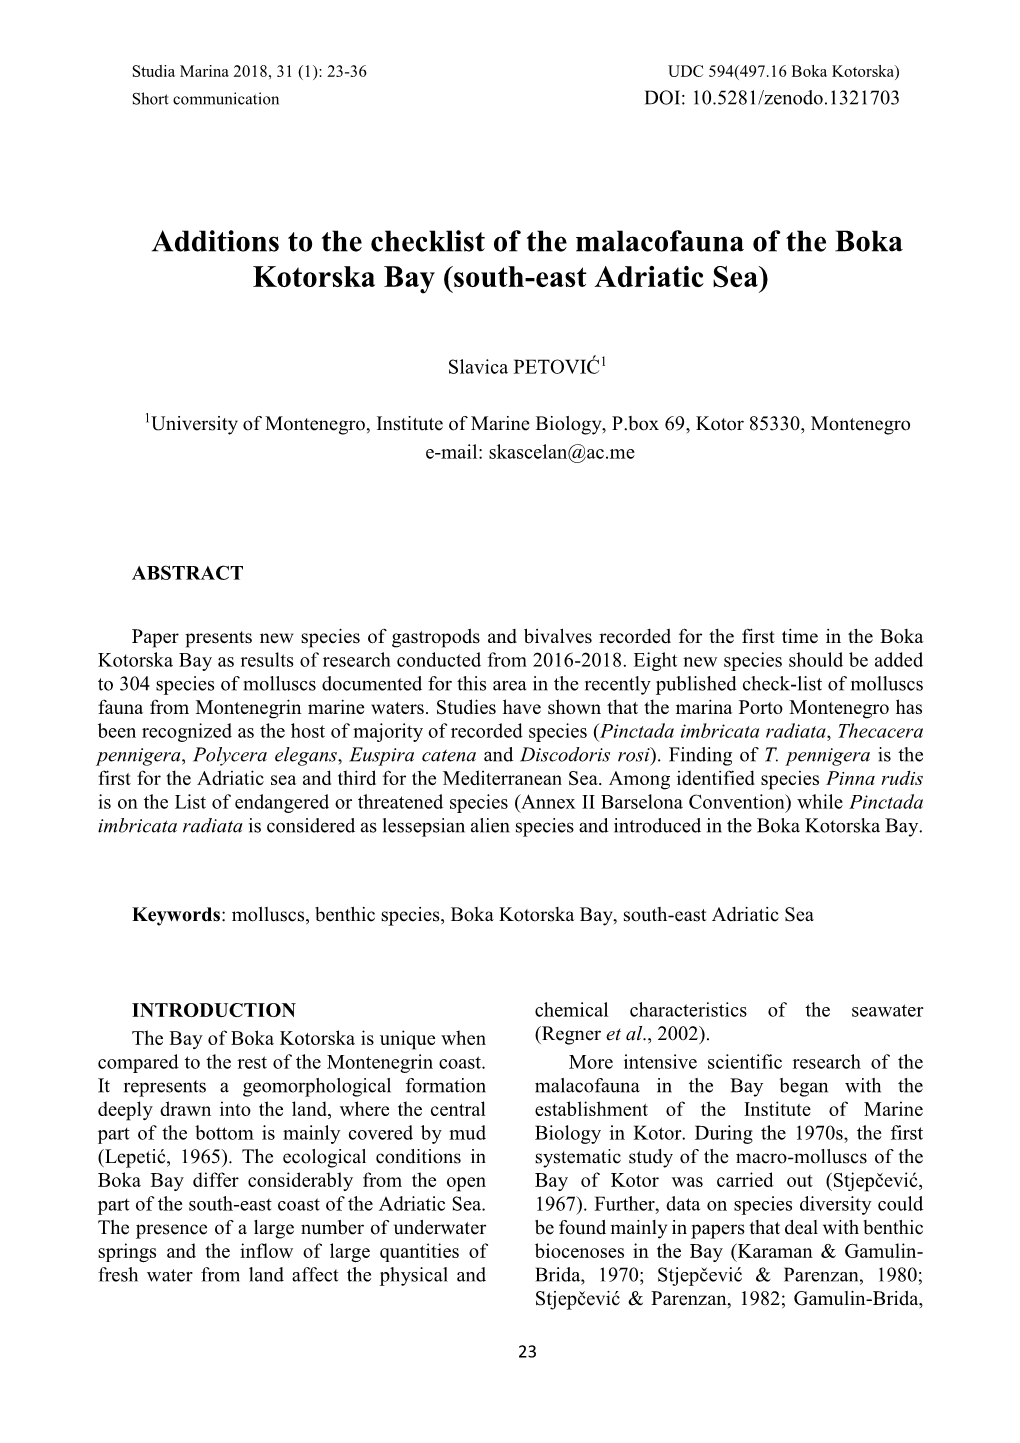 Additions to the Checklist of the Malacofauna of the Boka Kotorska Bay (South-East Adriatic Sea)